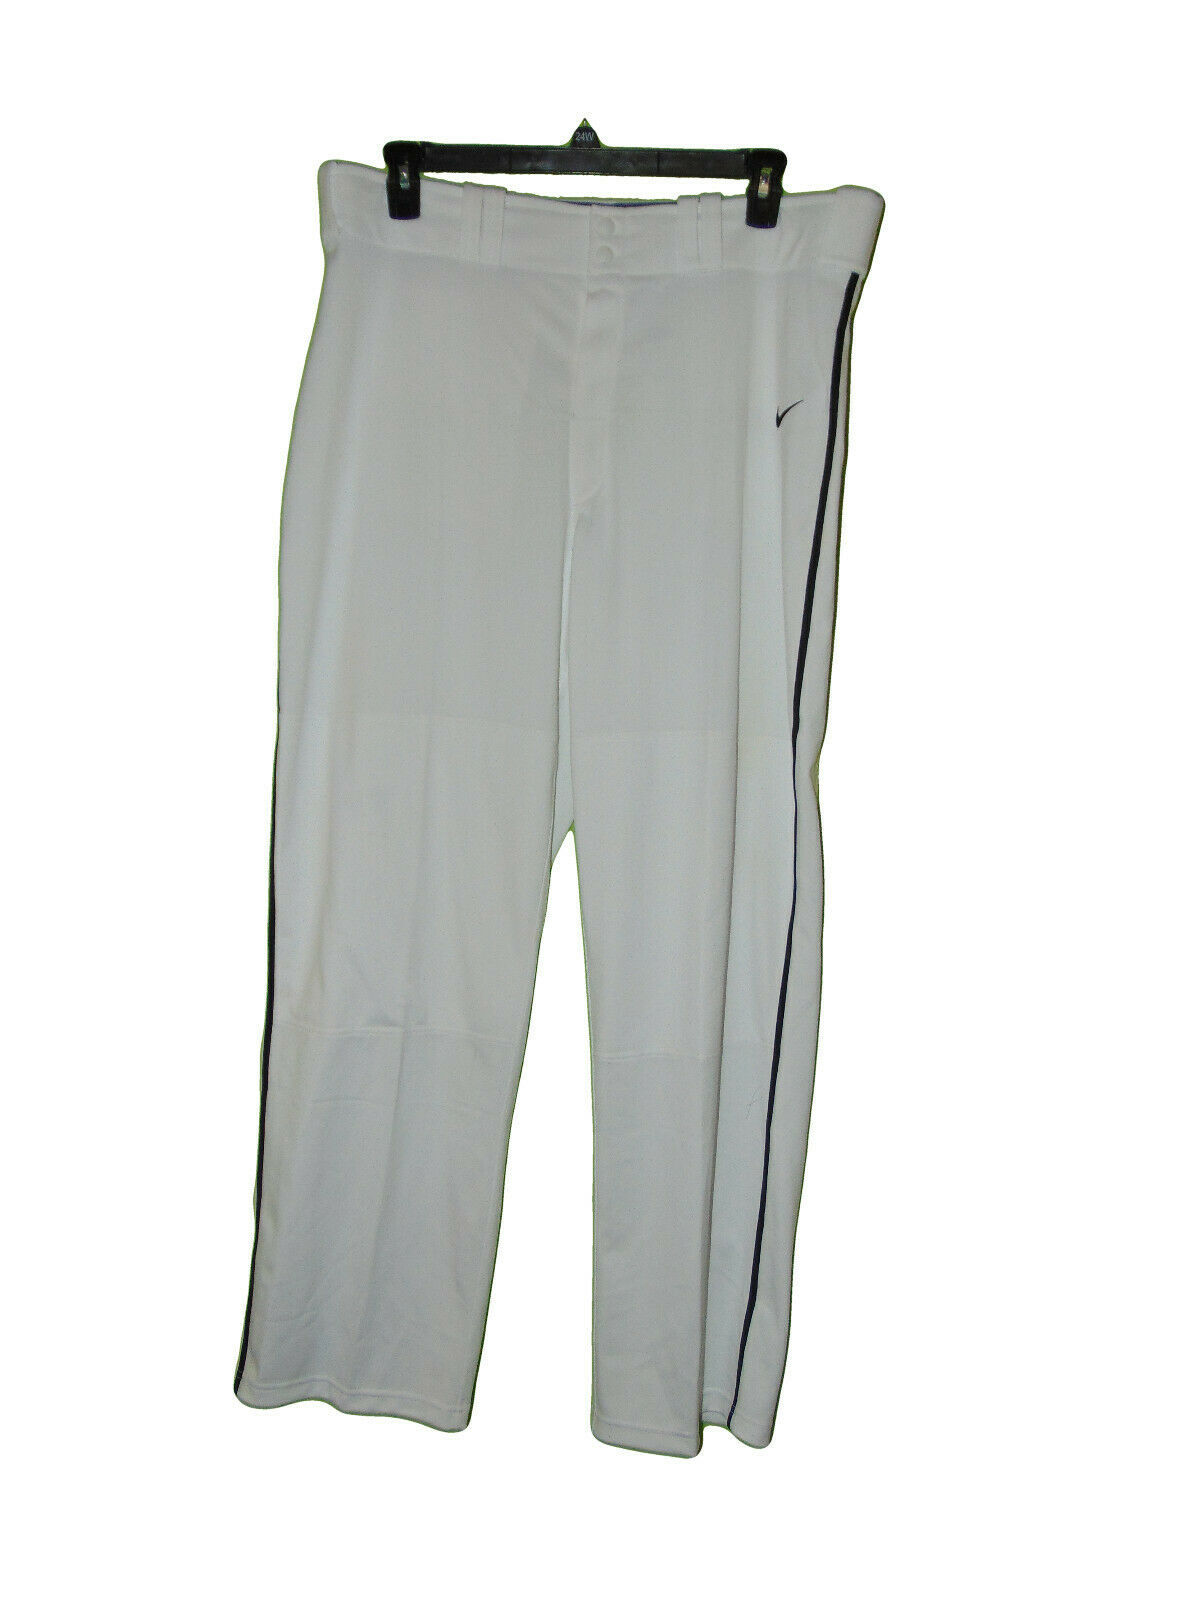 Nike White Black Pin Stripe Softball Baseball Pants Size Xxl Preowned ...